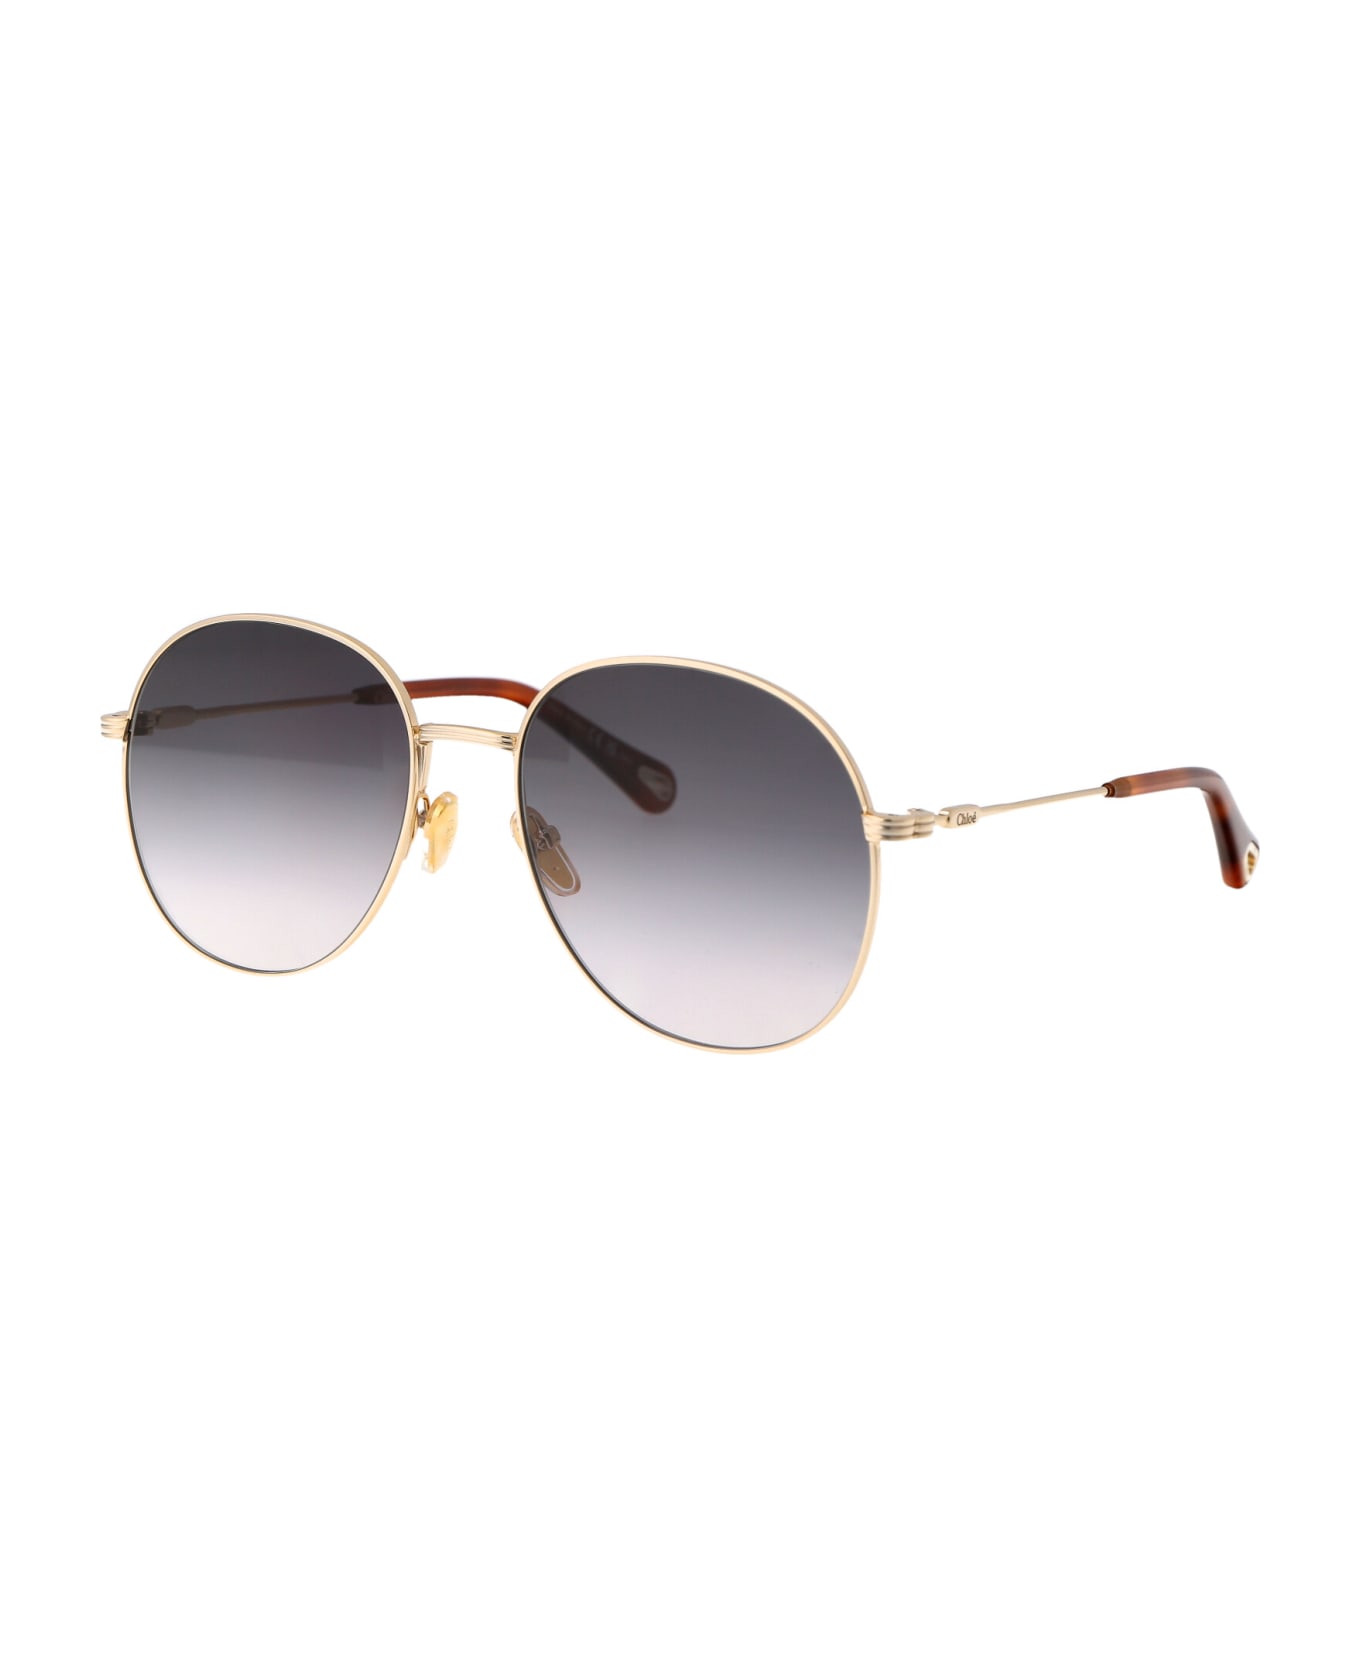 Chloé Eyewear Ch0178s Sunglasses - 001 GOLD GOLD GREY サングラス